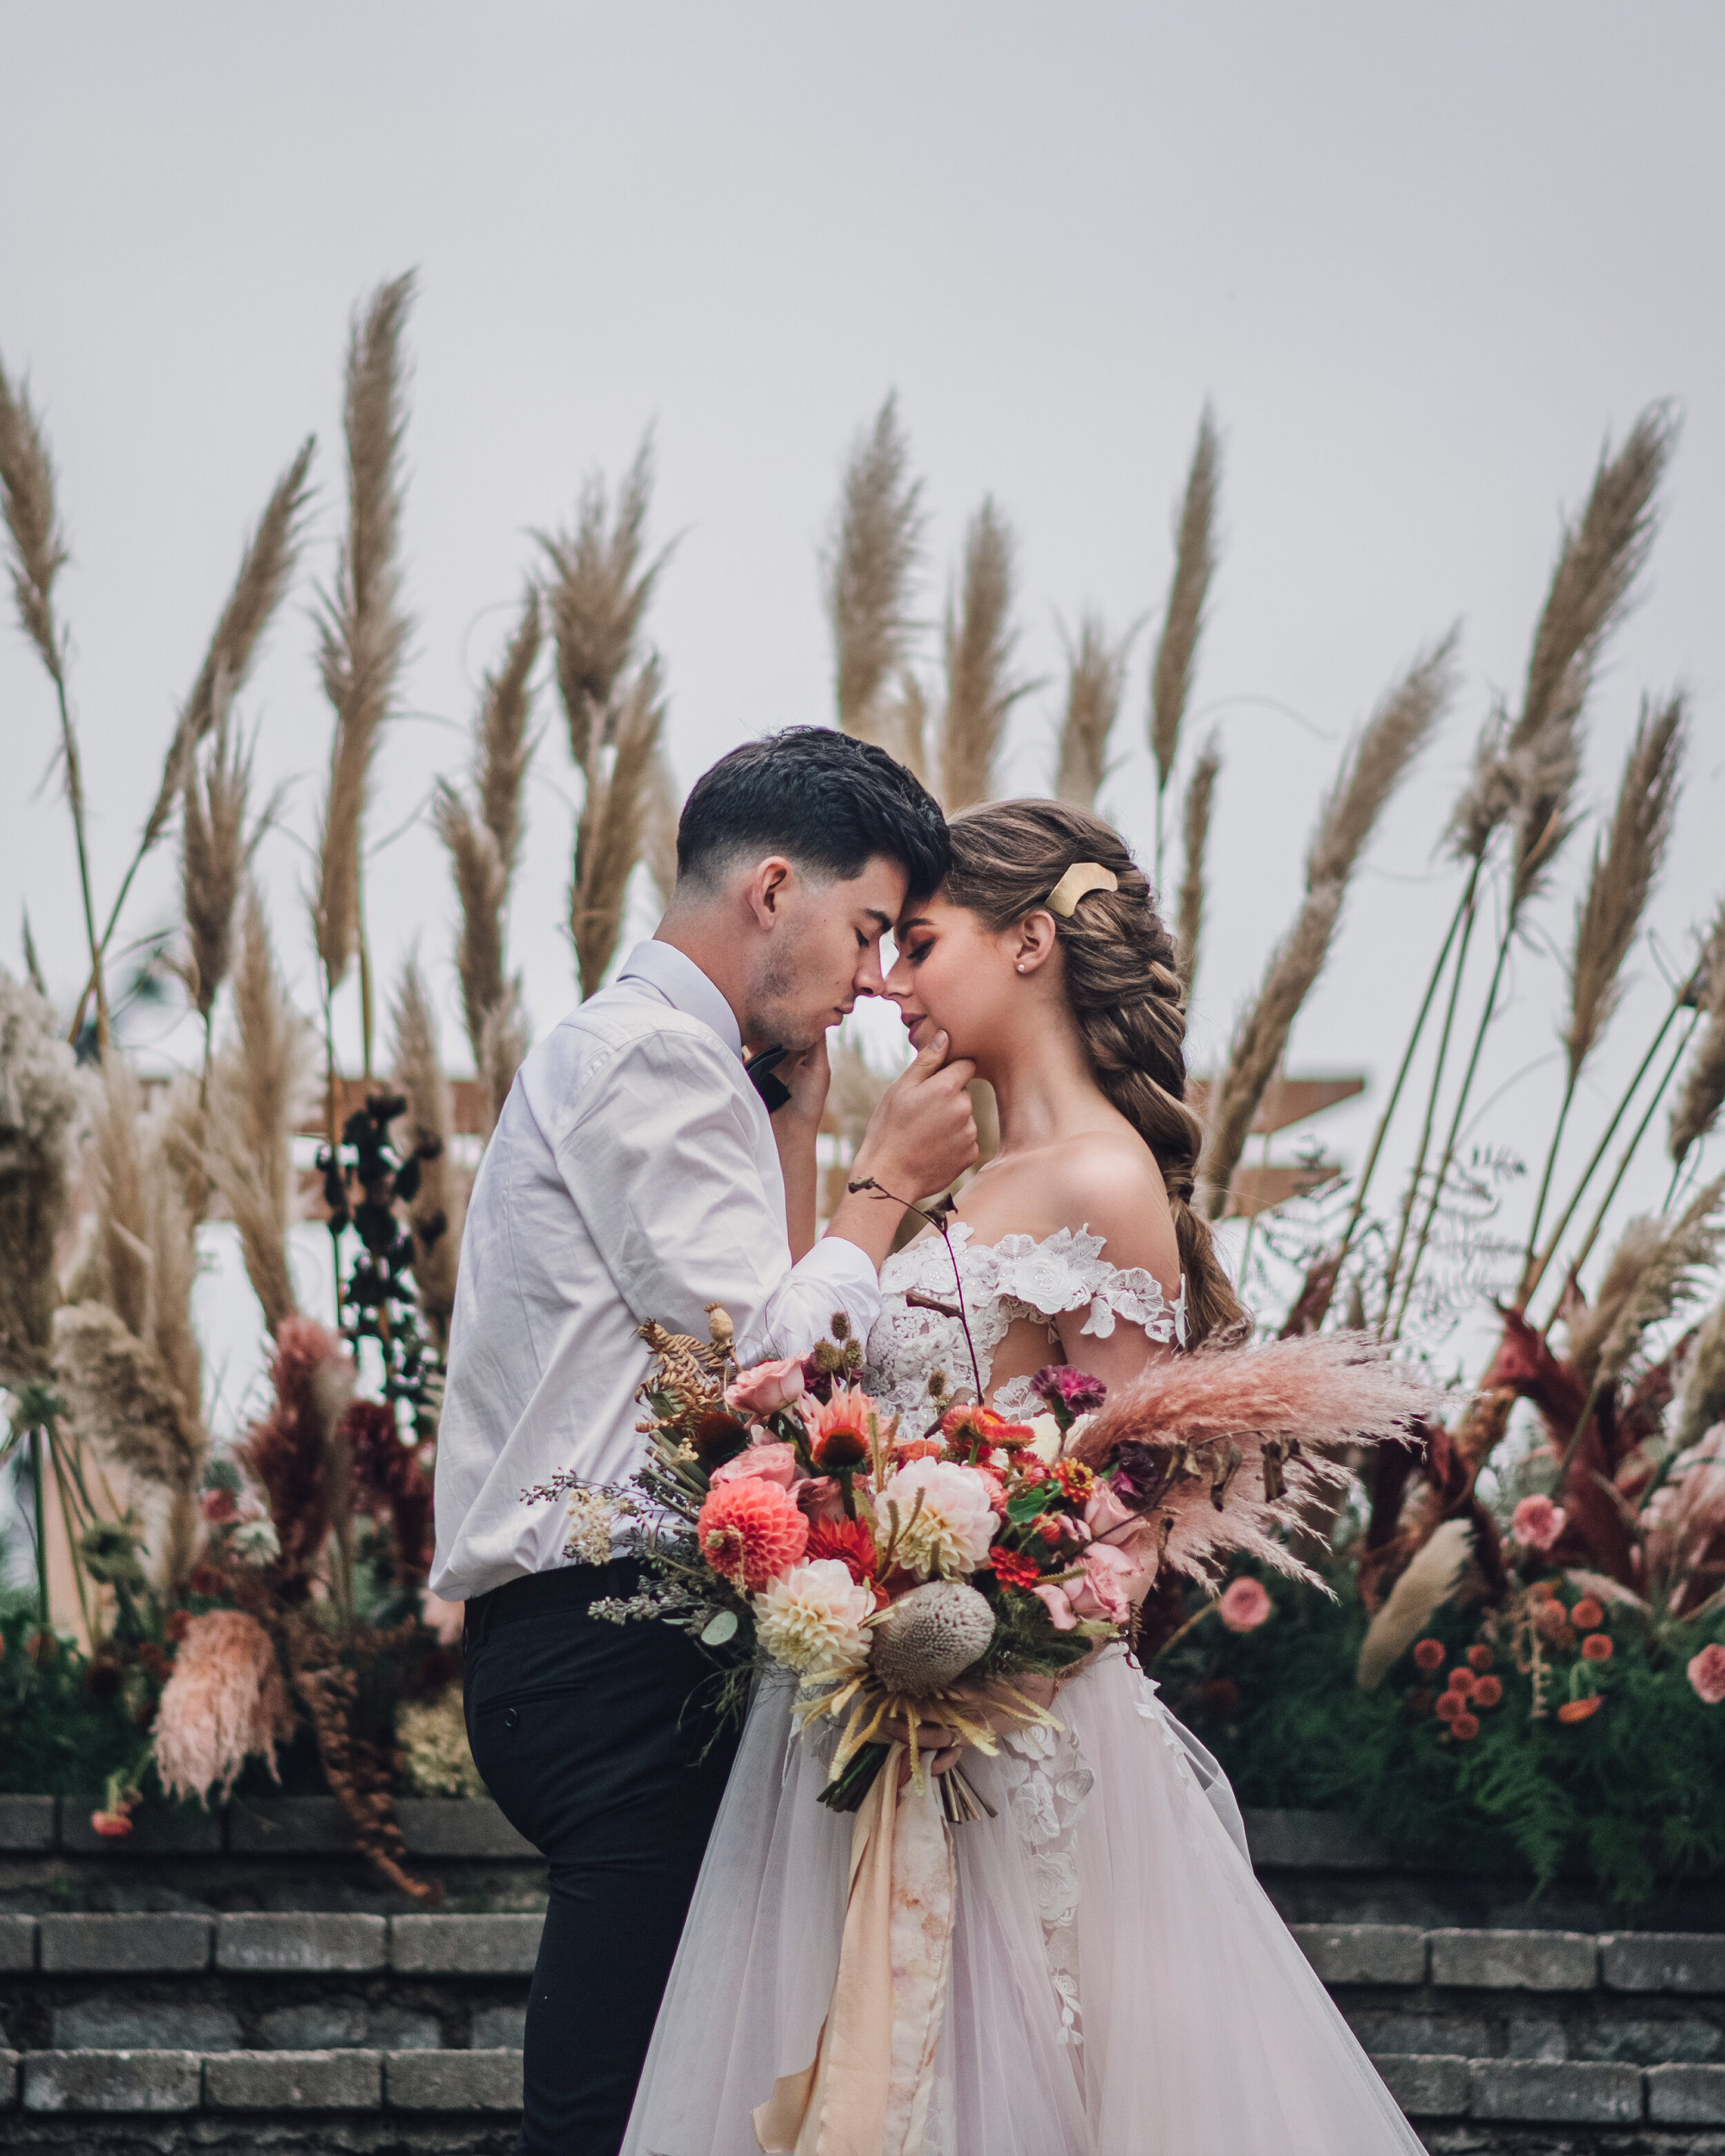 Boho Romantic Wedding - Laura Olson Photography - Sunshine Coast BC & Vancouver Wedding Photographer - Kindle Workshop - Victoria BC --2.jpg